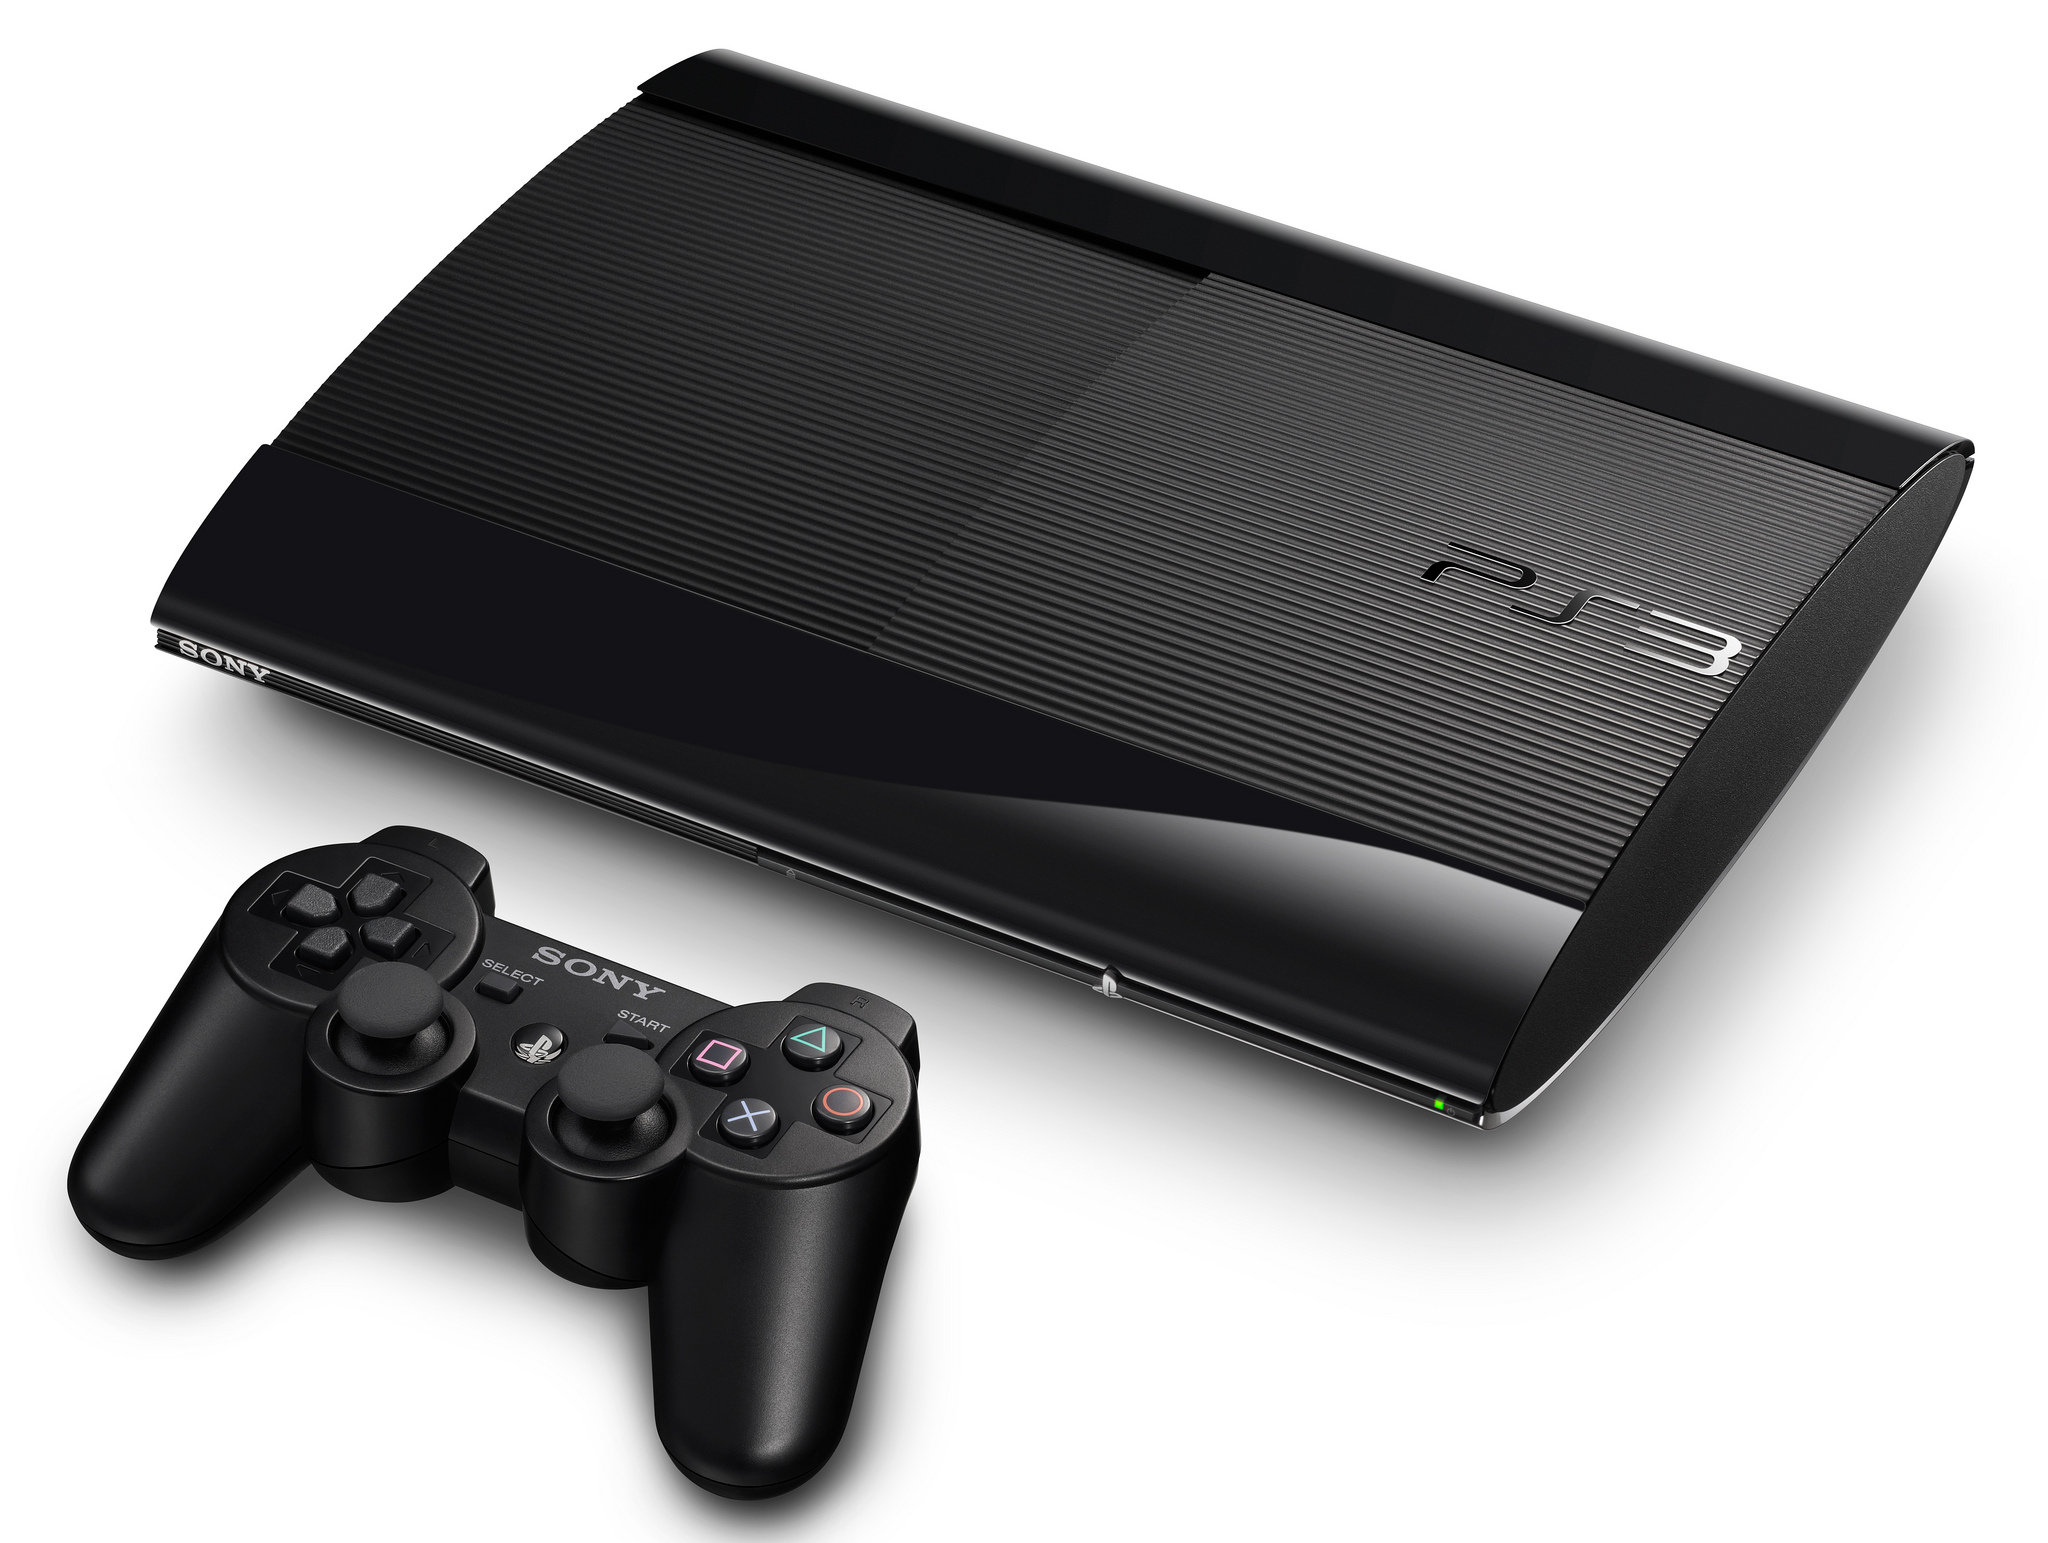 Trenutno aktuelni izgled PlayStationa 3 - Super Slim